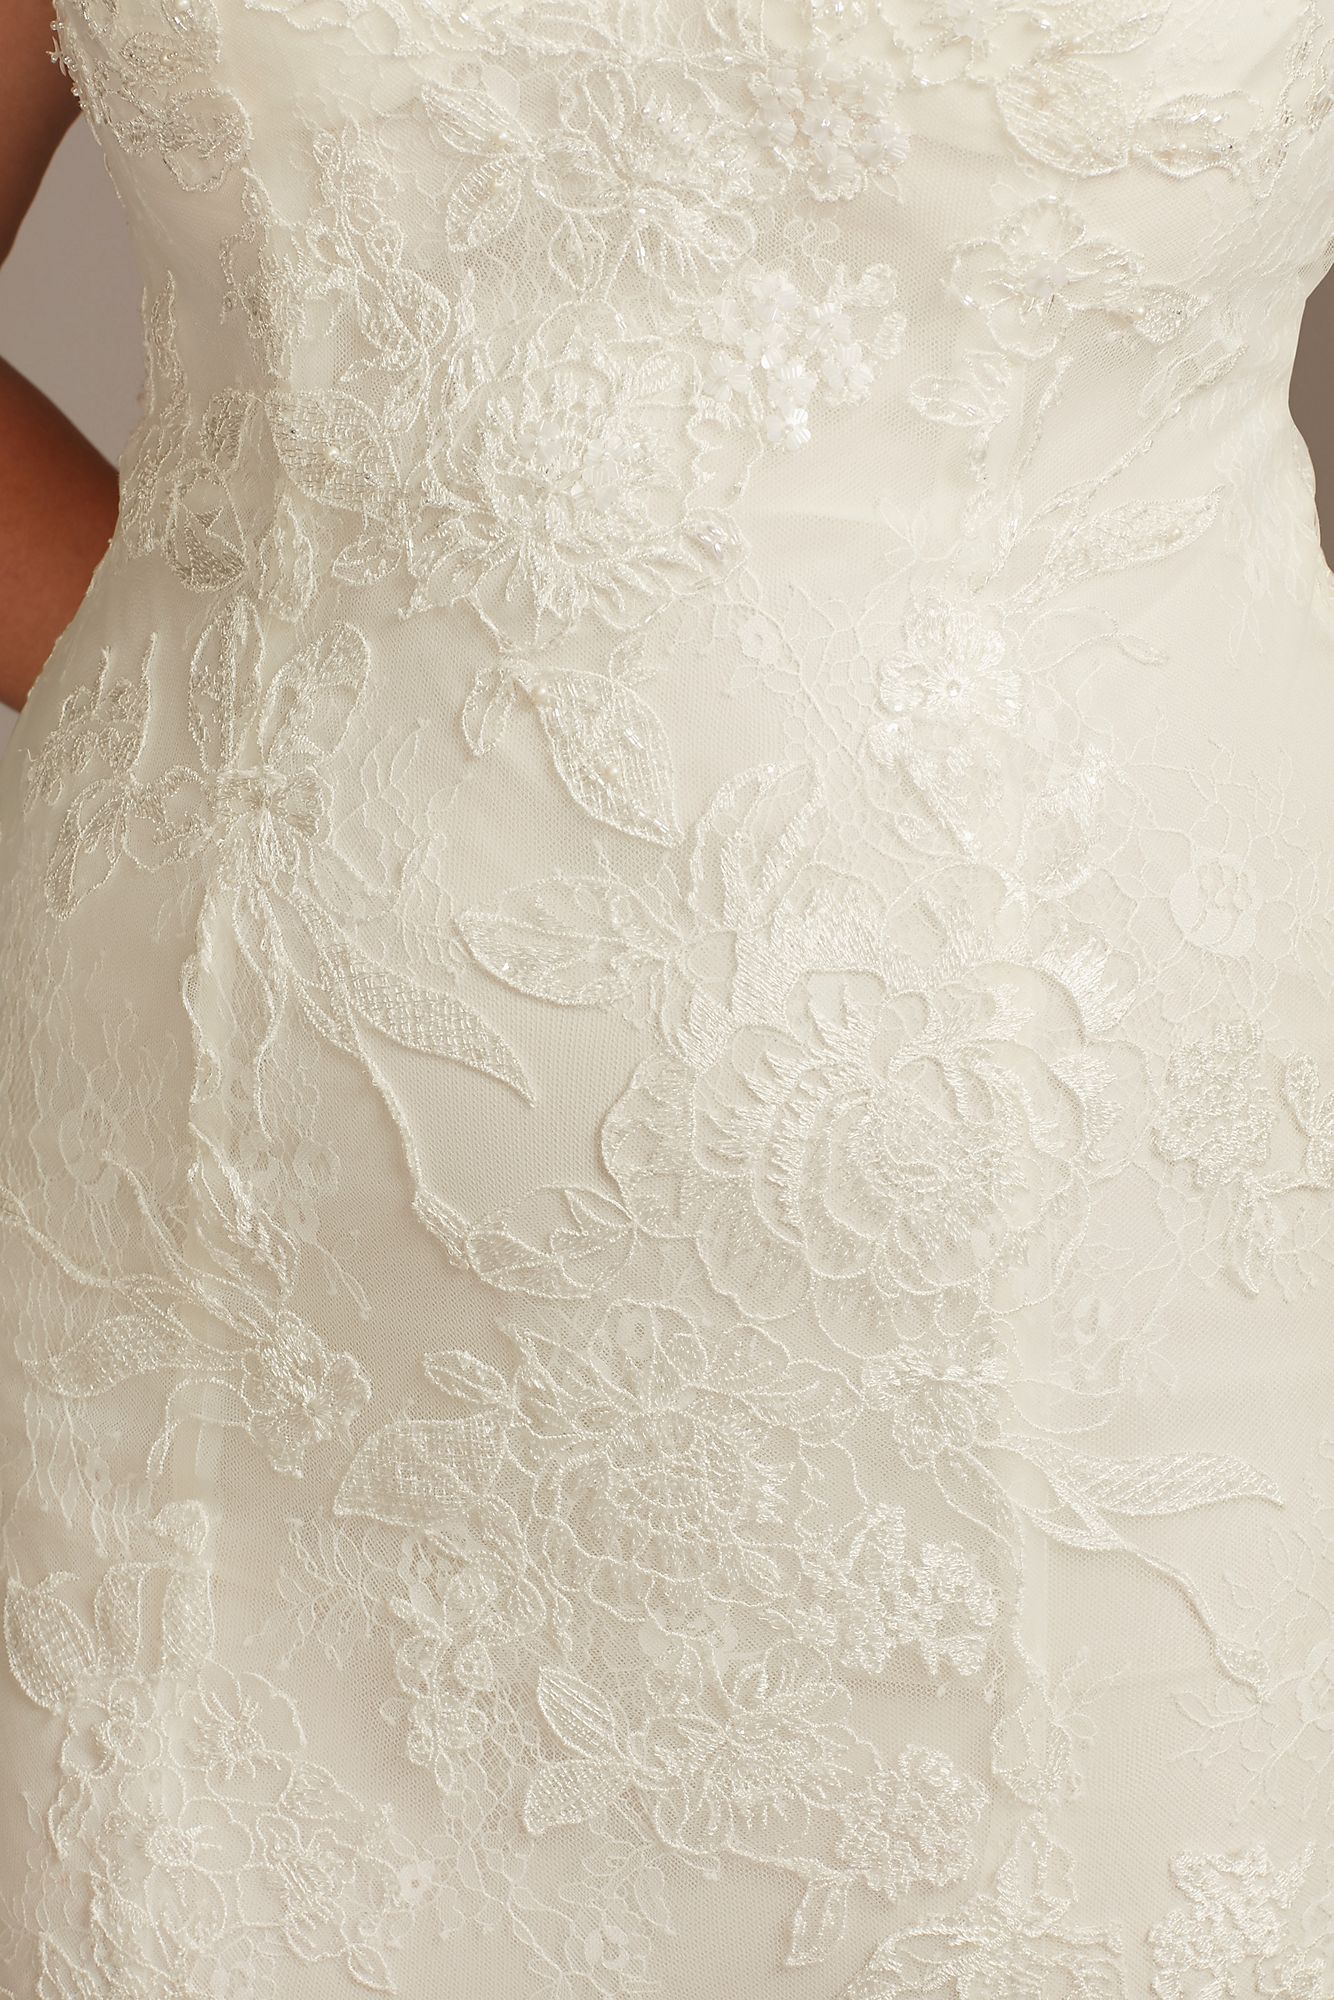 New Style Plus Size Floral Applique Spaghetti Mermaid Wedding Dress 9WG3981